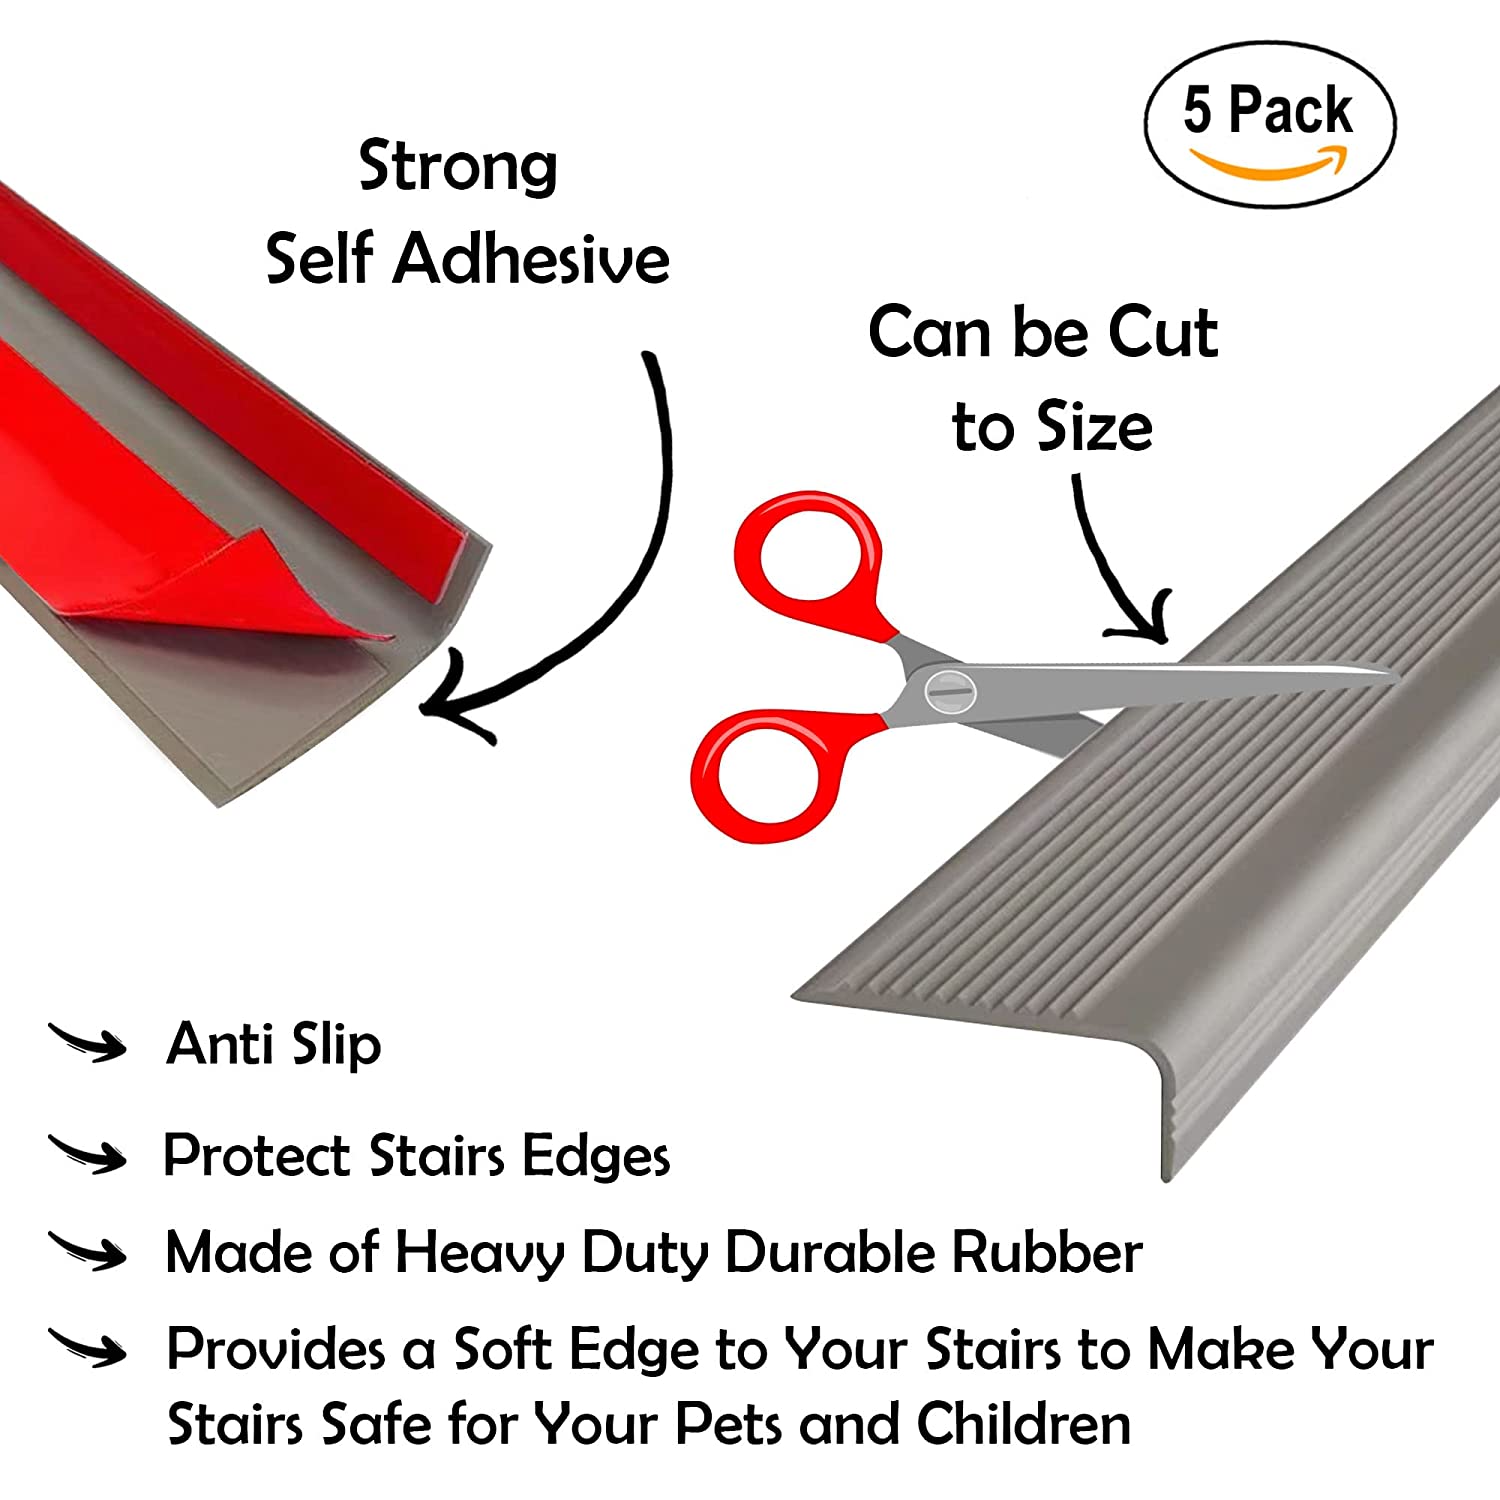 5-Pack 36x2x1 Anti-Slip Stair Edge Protectors – FINE RUBBER